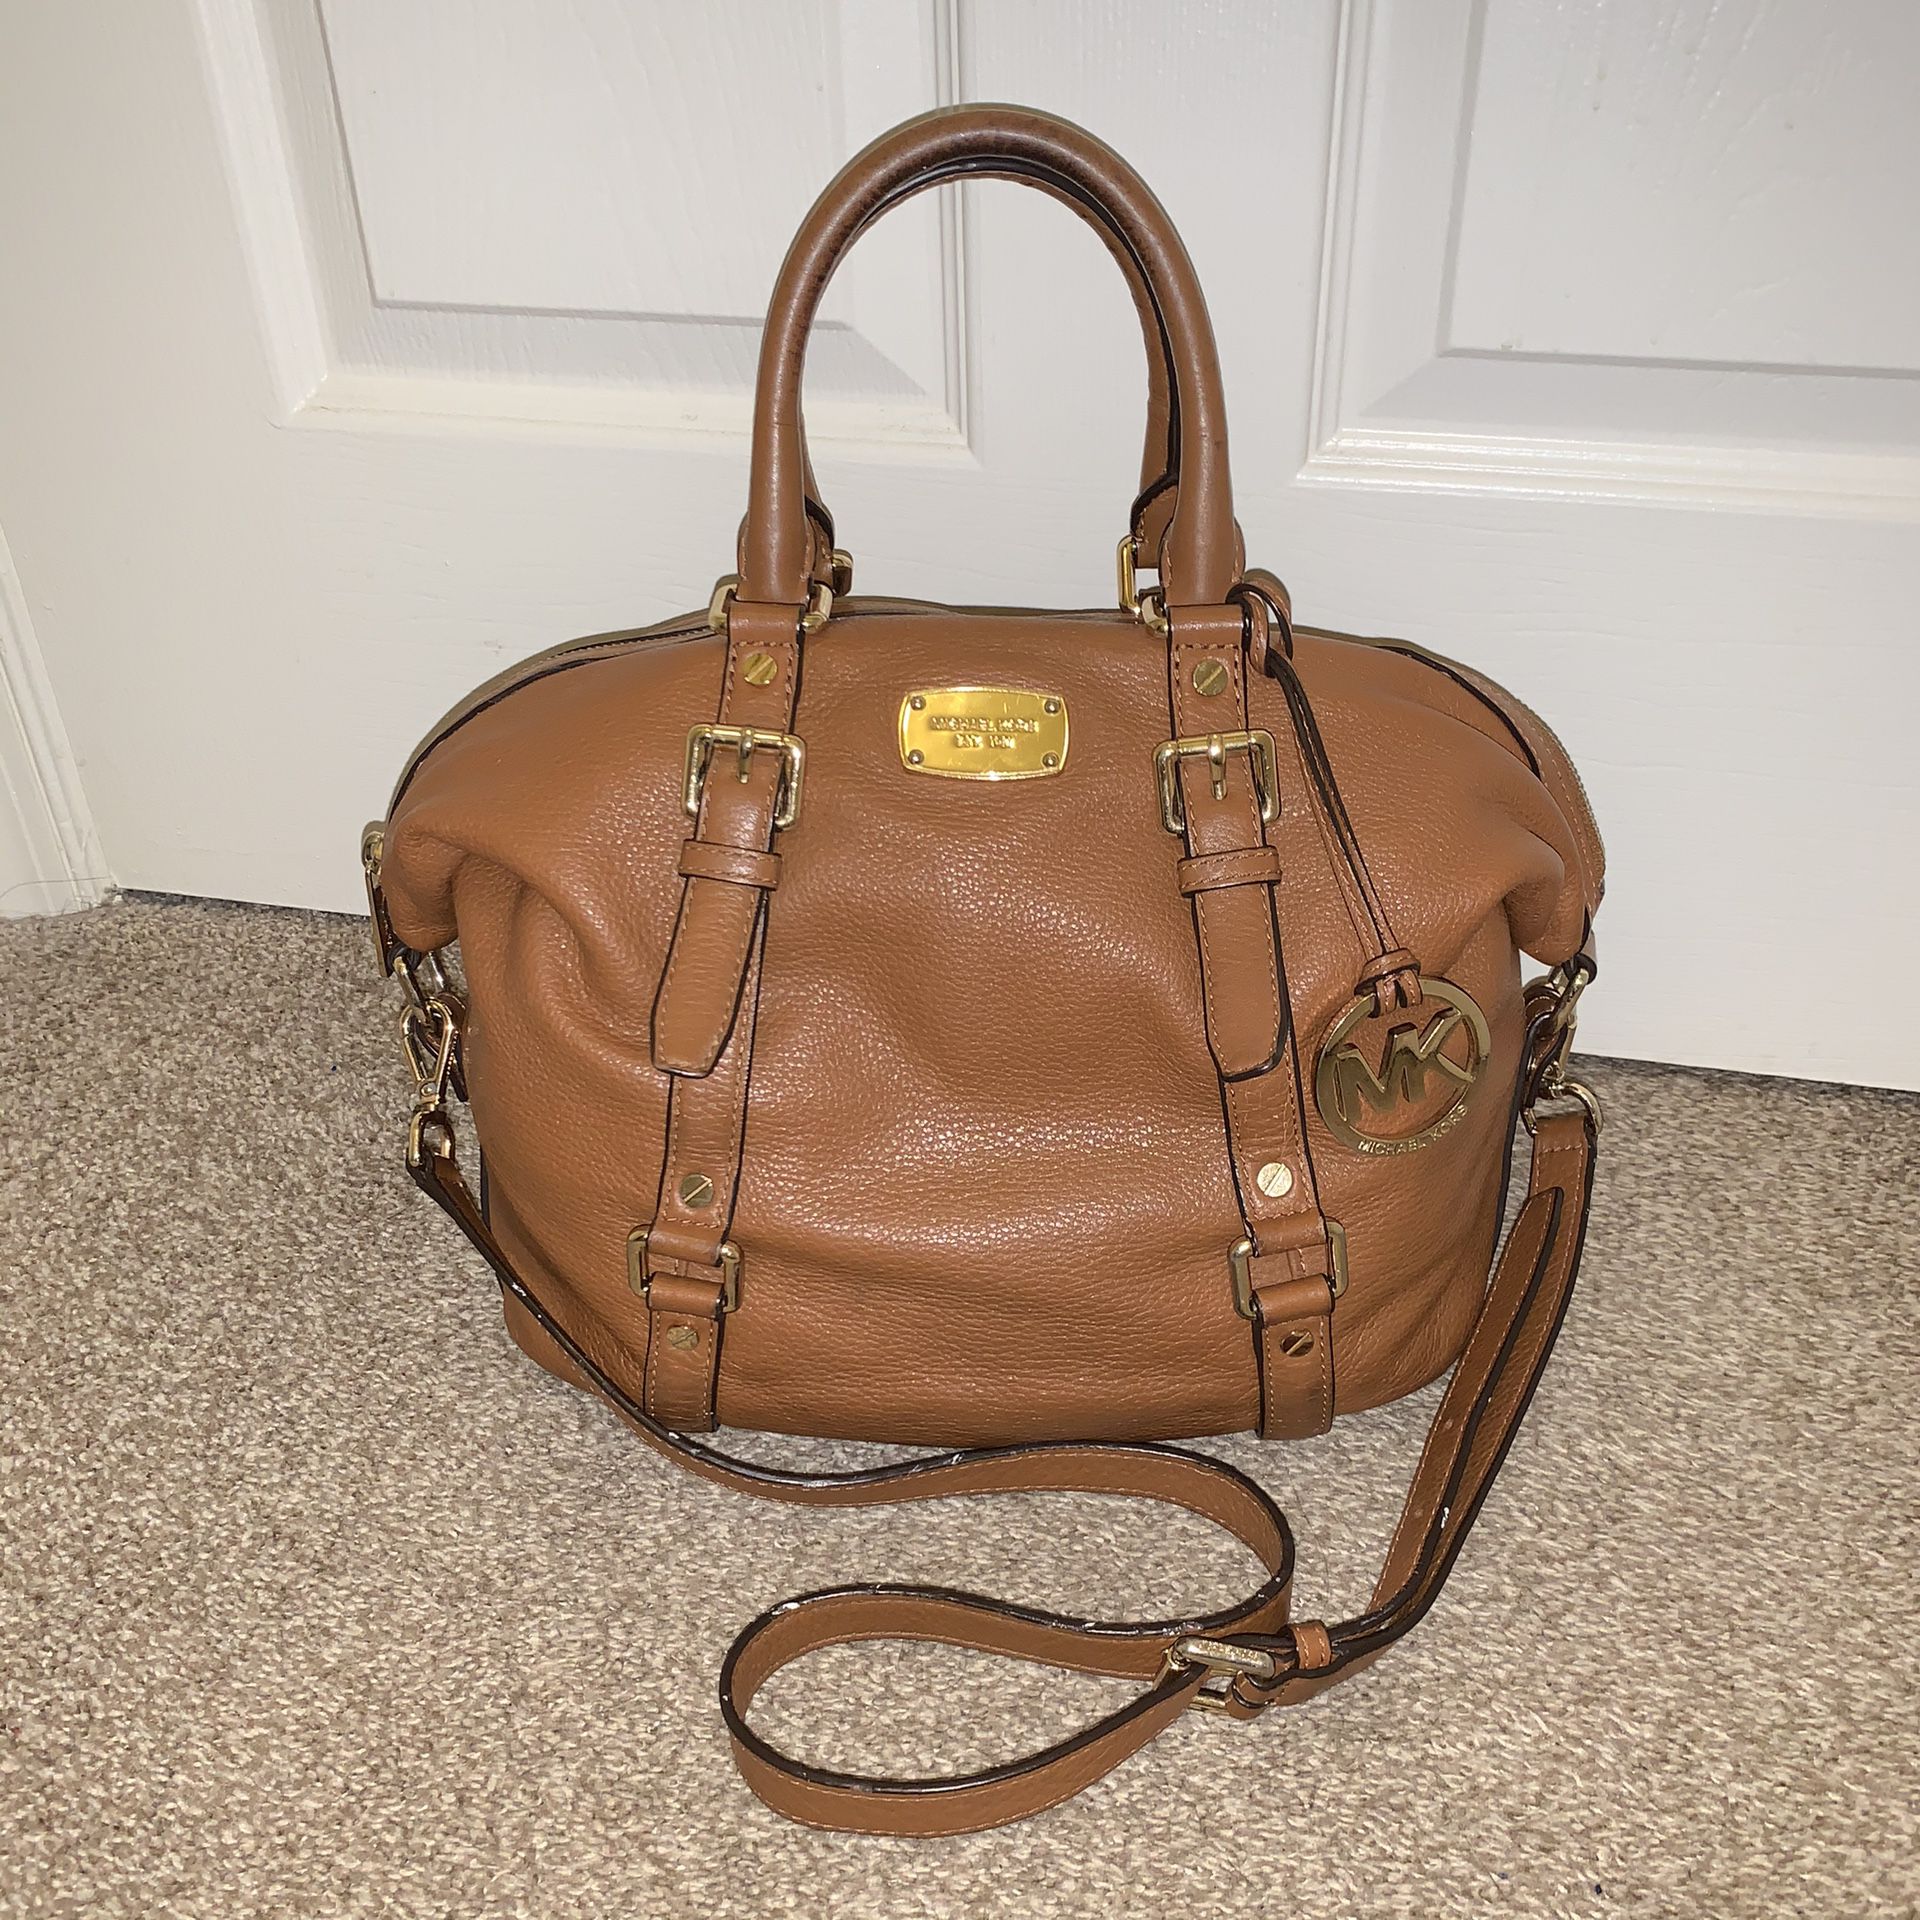 Michael kors leather purse